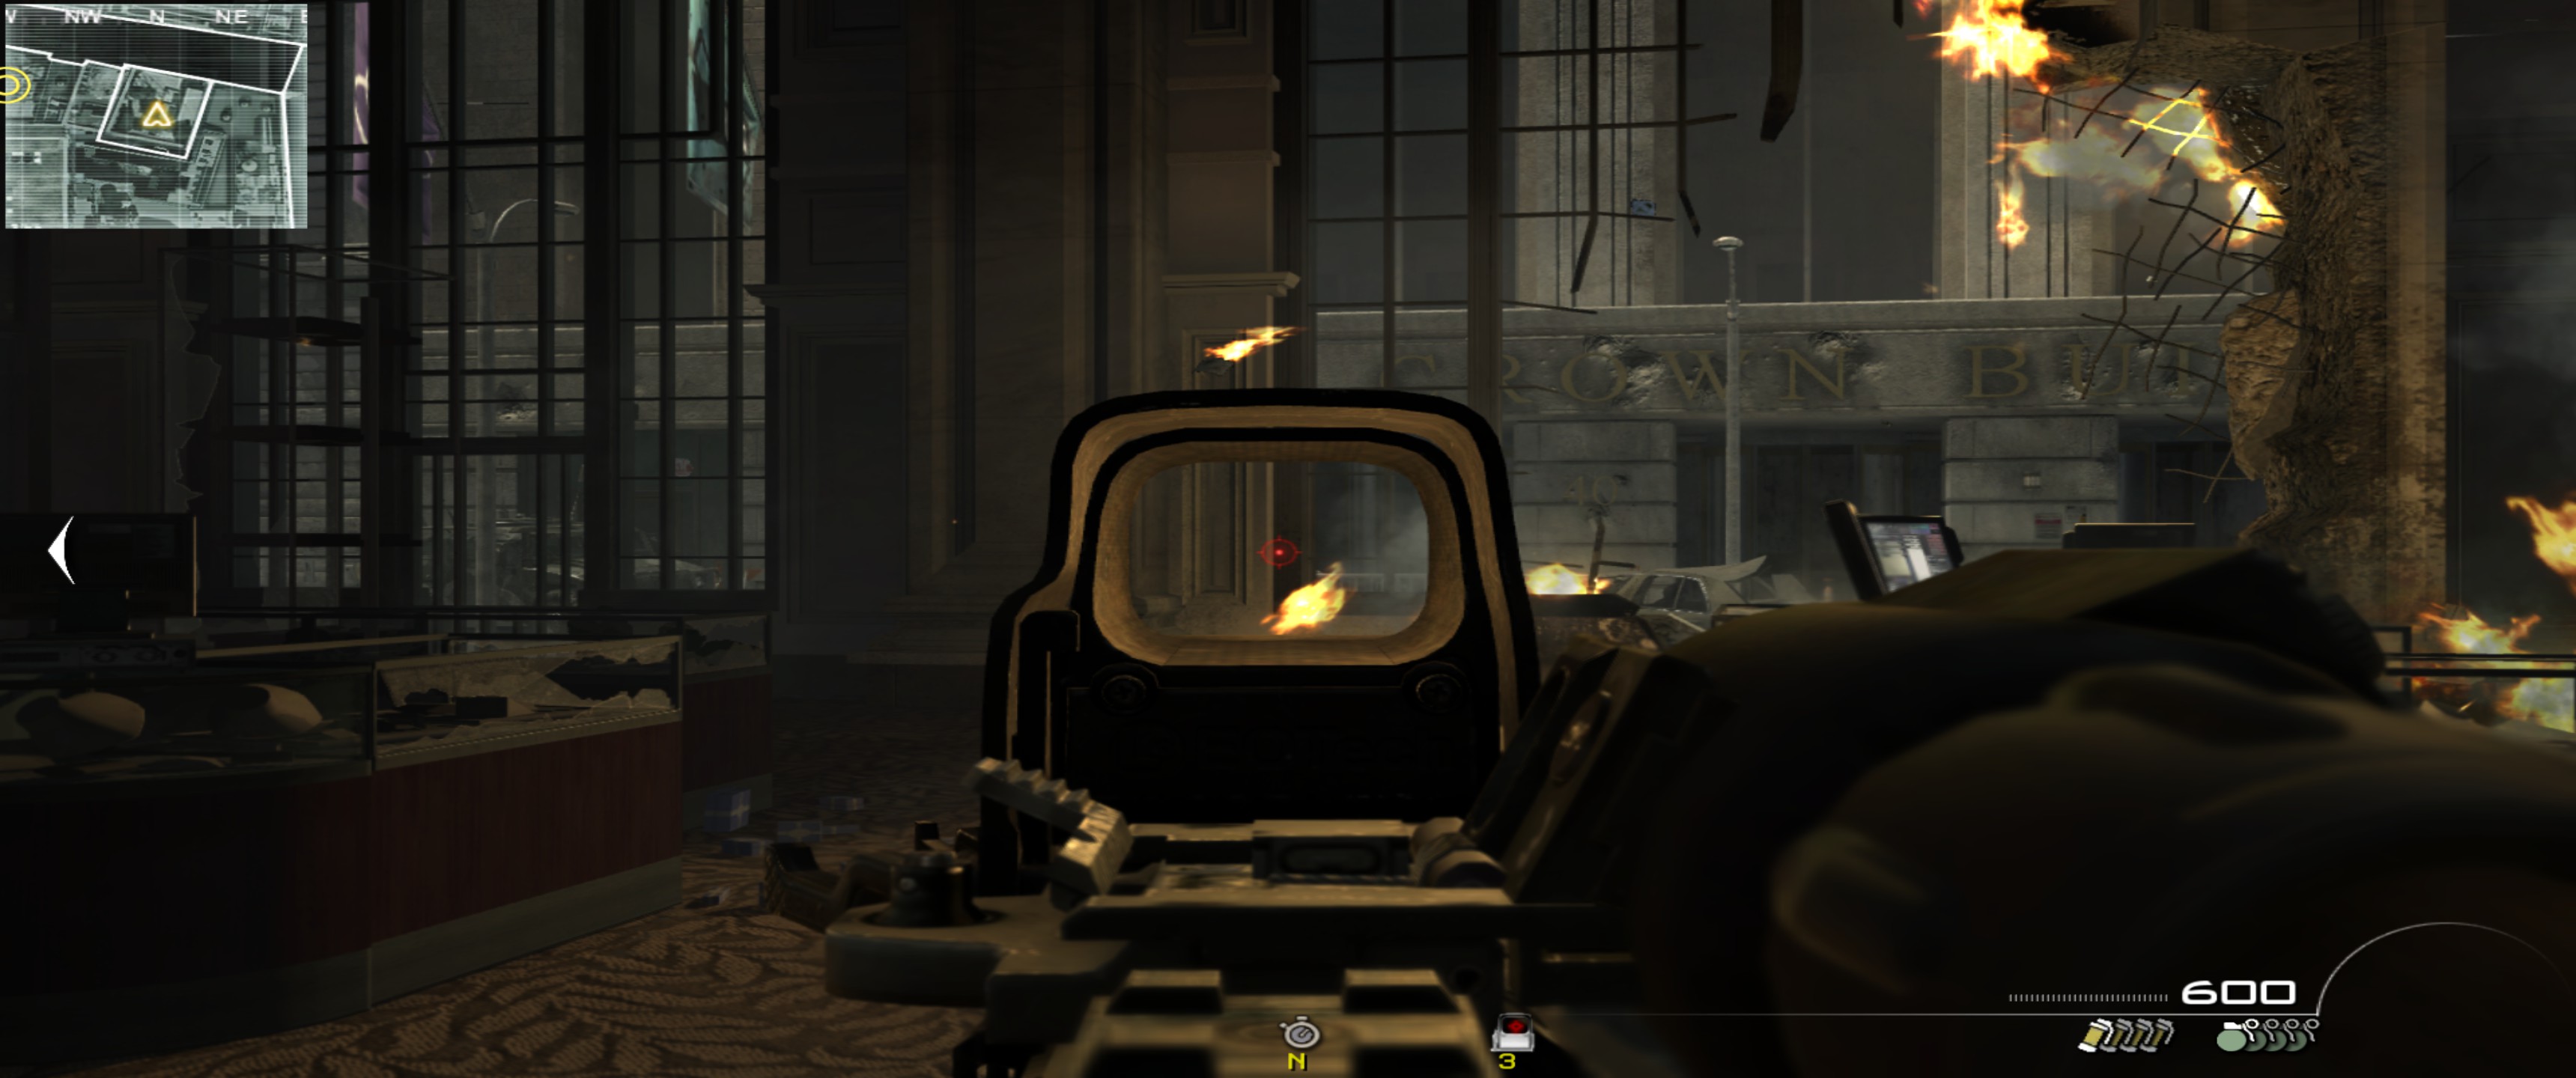 Call of Duty: Modern Warfare 3 Ultrawide (21:9) Monitor Fix - The Results - EA815EA